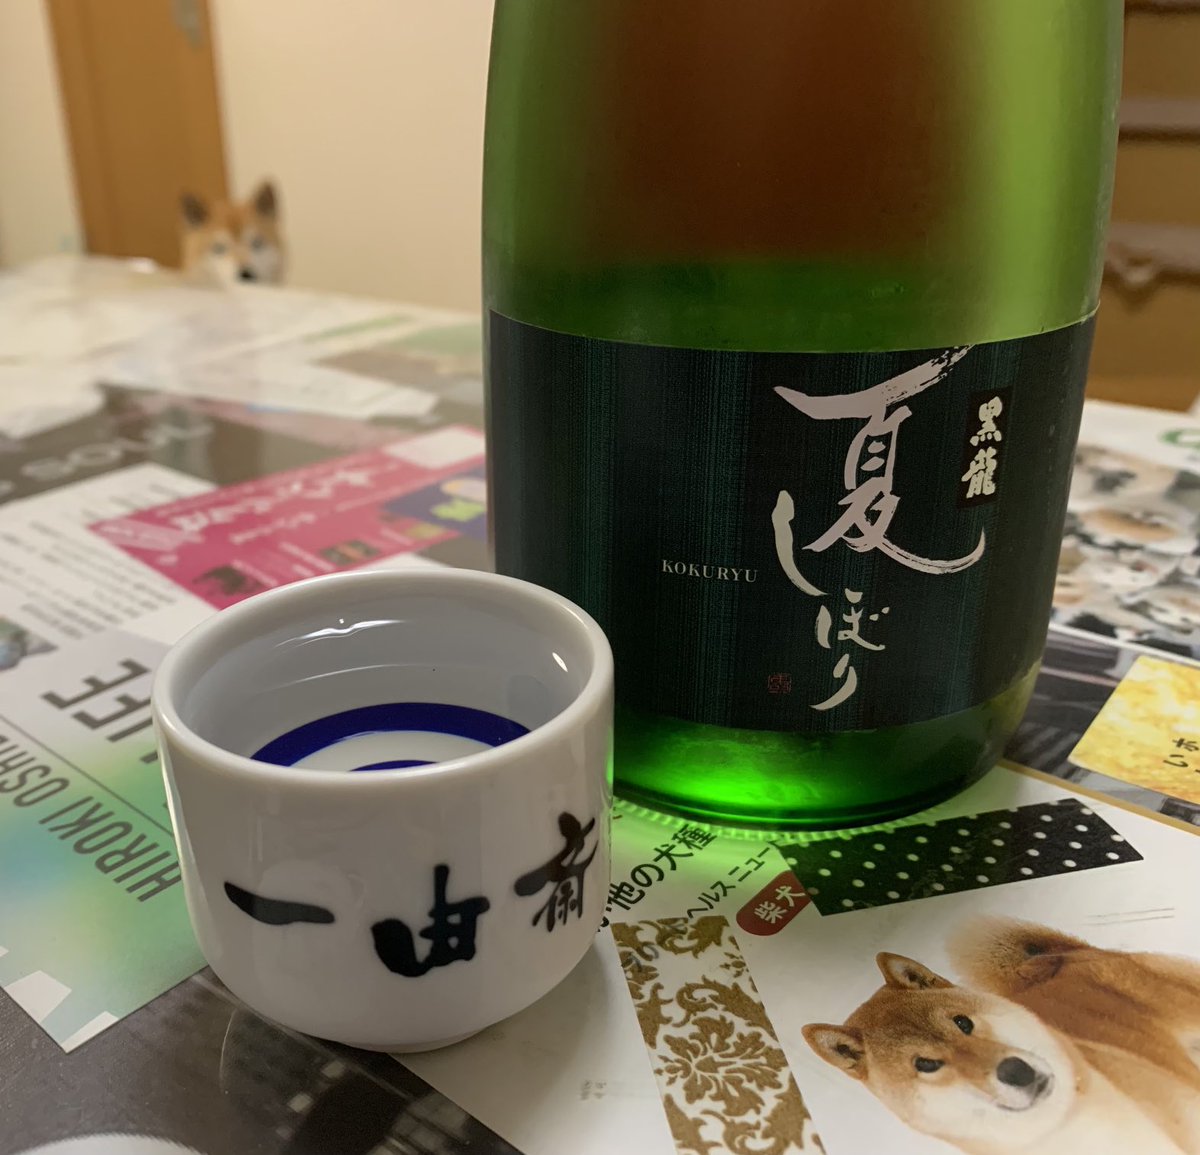 test ツイッターメディア - では始めます。
福井県の黒龍酒造
「黒龍 夏しぼり」。
純米吟醸酒。
夏っぽい暑さになってきました。 https://t.co/MgDMbJUkzk